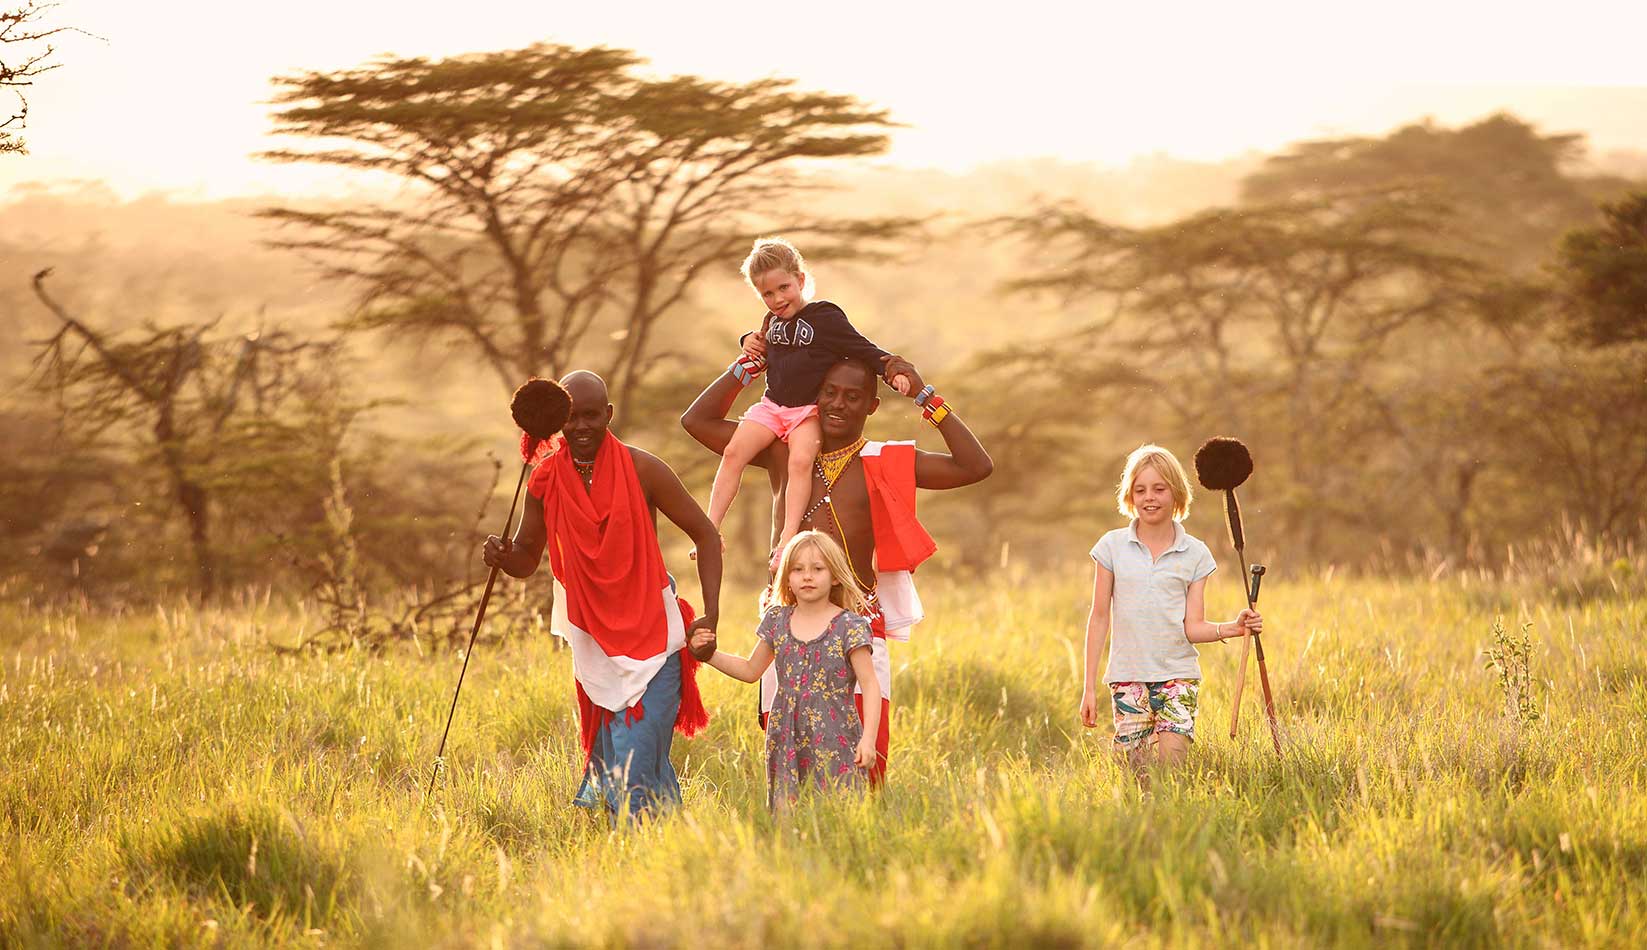 - Ngorongoro Conservation Area, Tanzania -